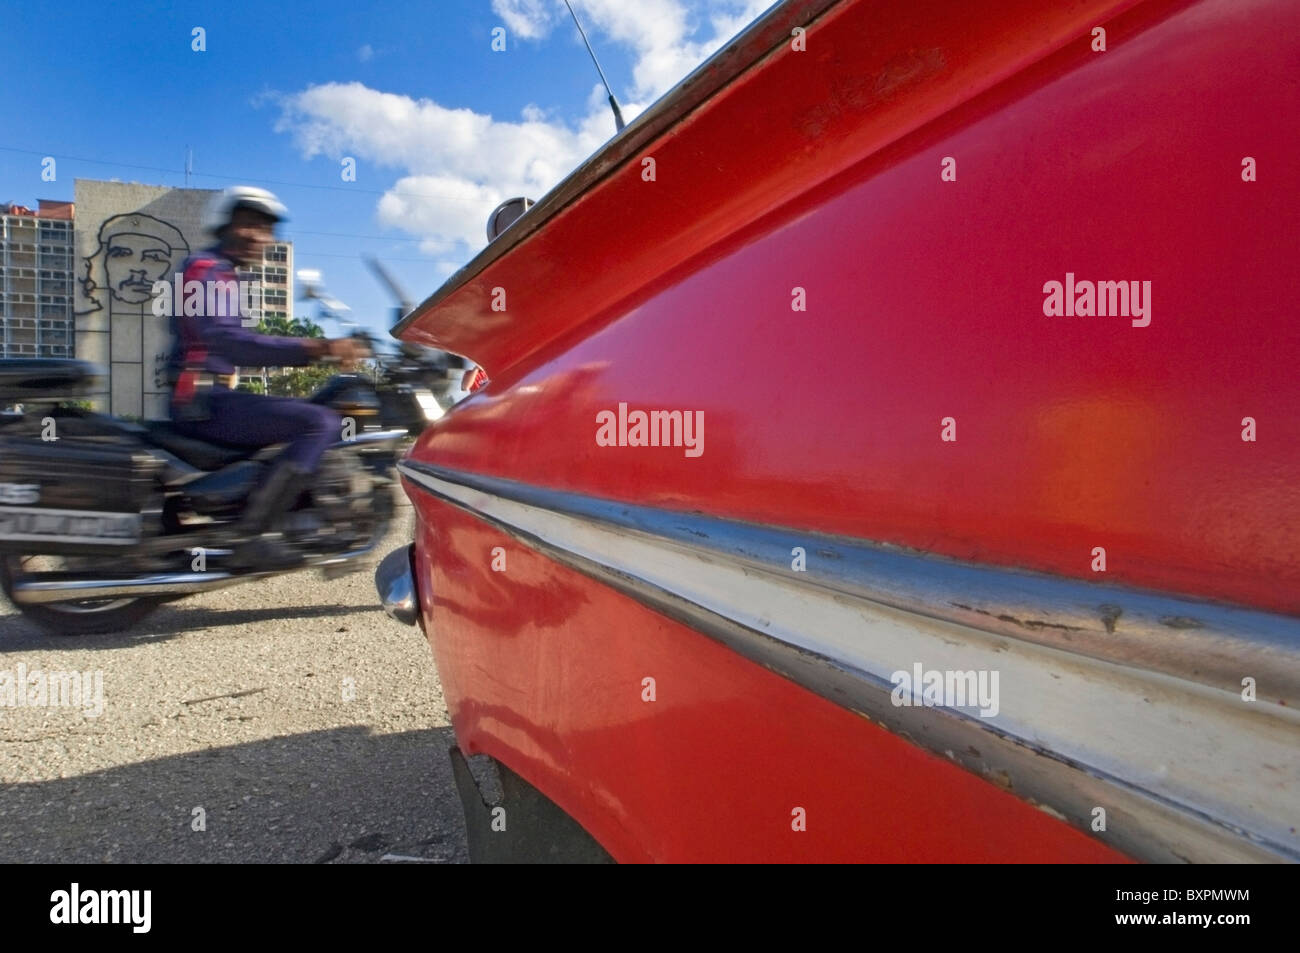 A Blurred Police Motorcyclist Passing The Che Guevara Sculpture In Plaza De La Revoluciûn. Stock Photo